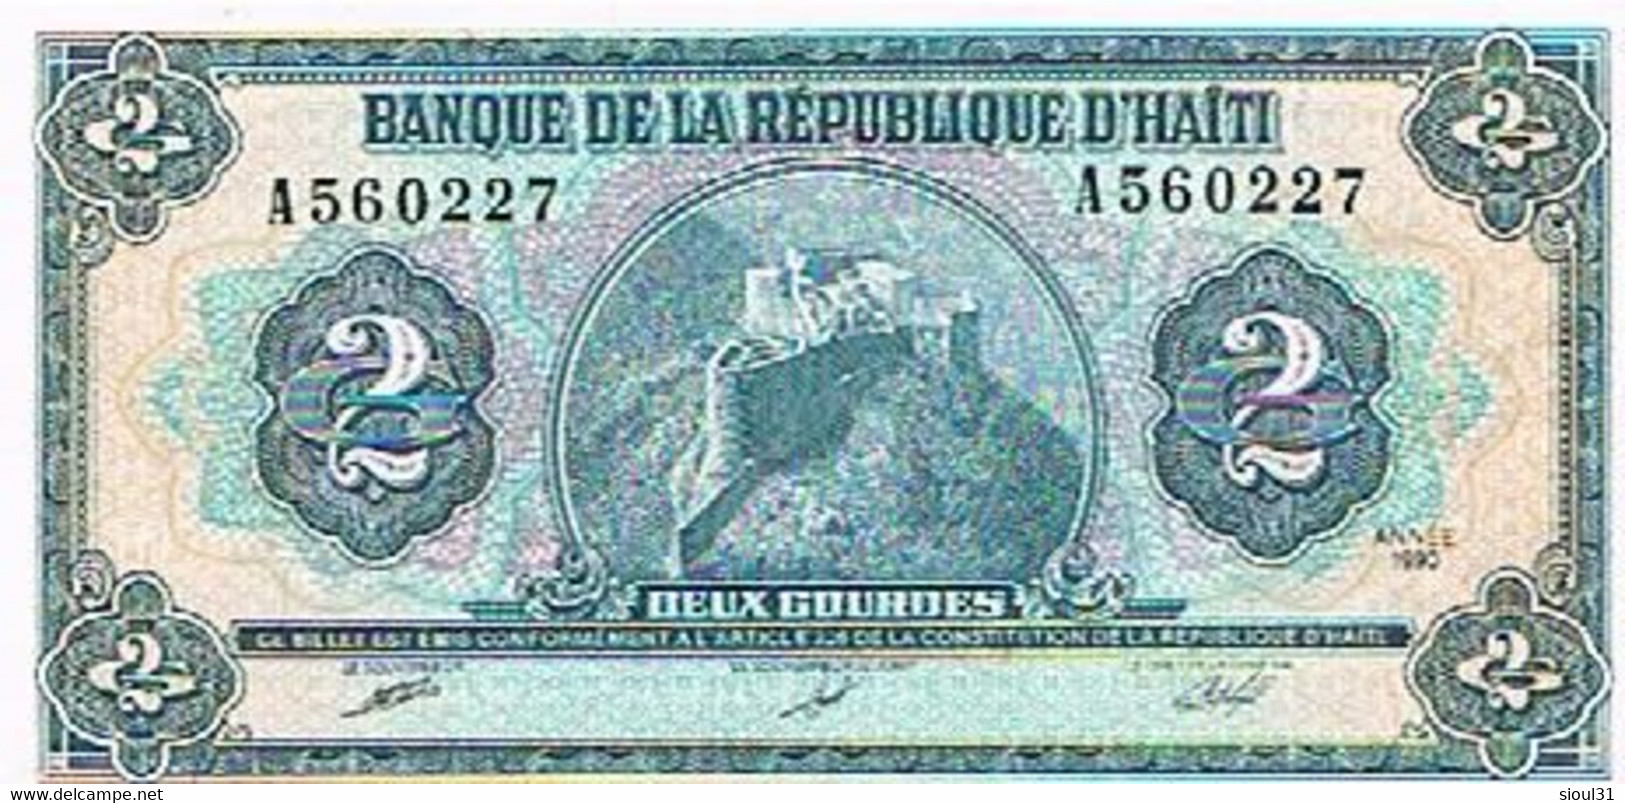 BANQUE  DE LA REPUBLIQUE  D 'HAITI  BILLET  2 GOURDES 1990     N°A560227                              BI17 - Haïti